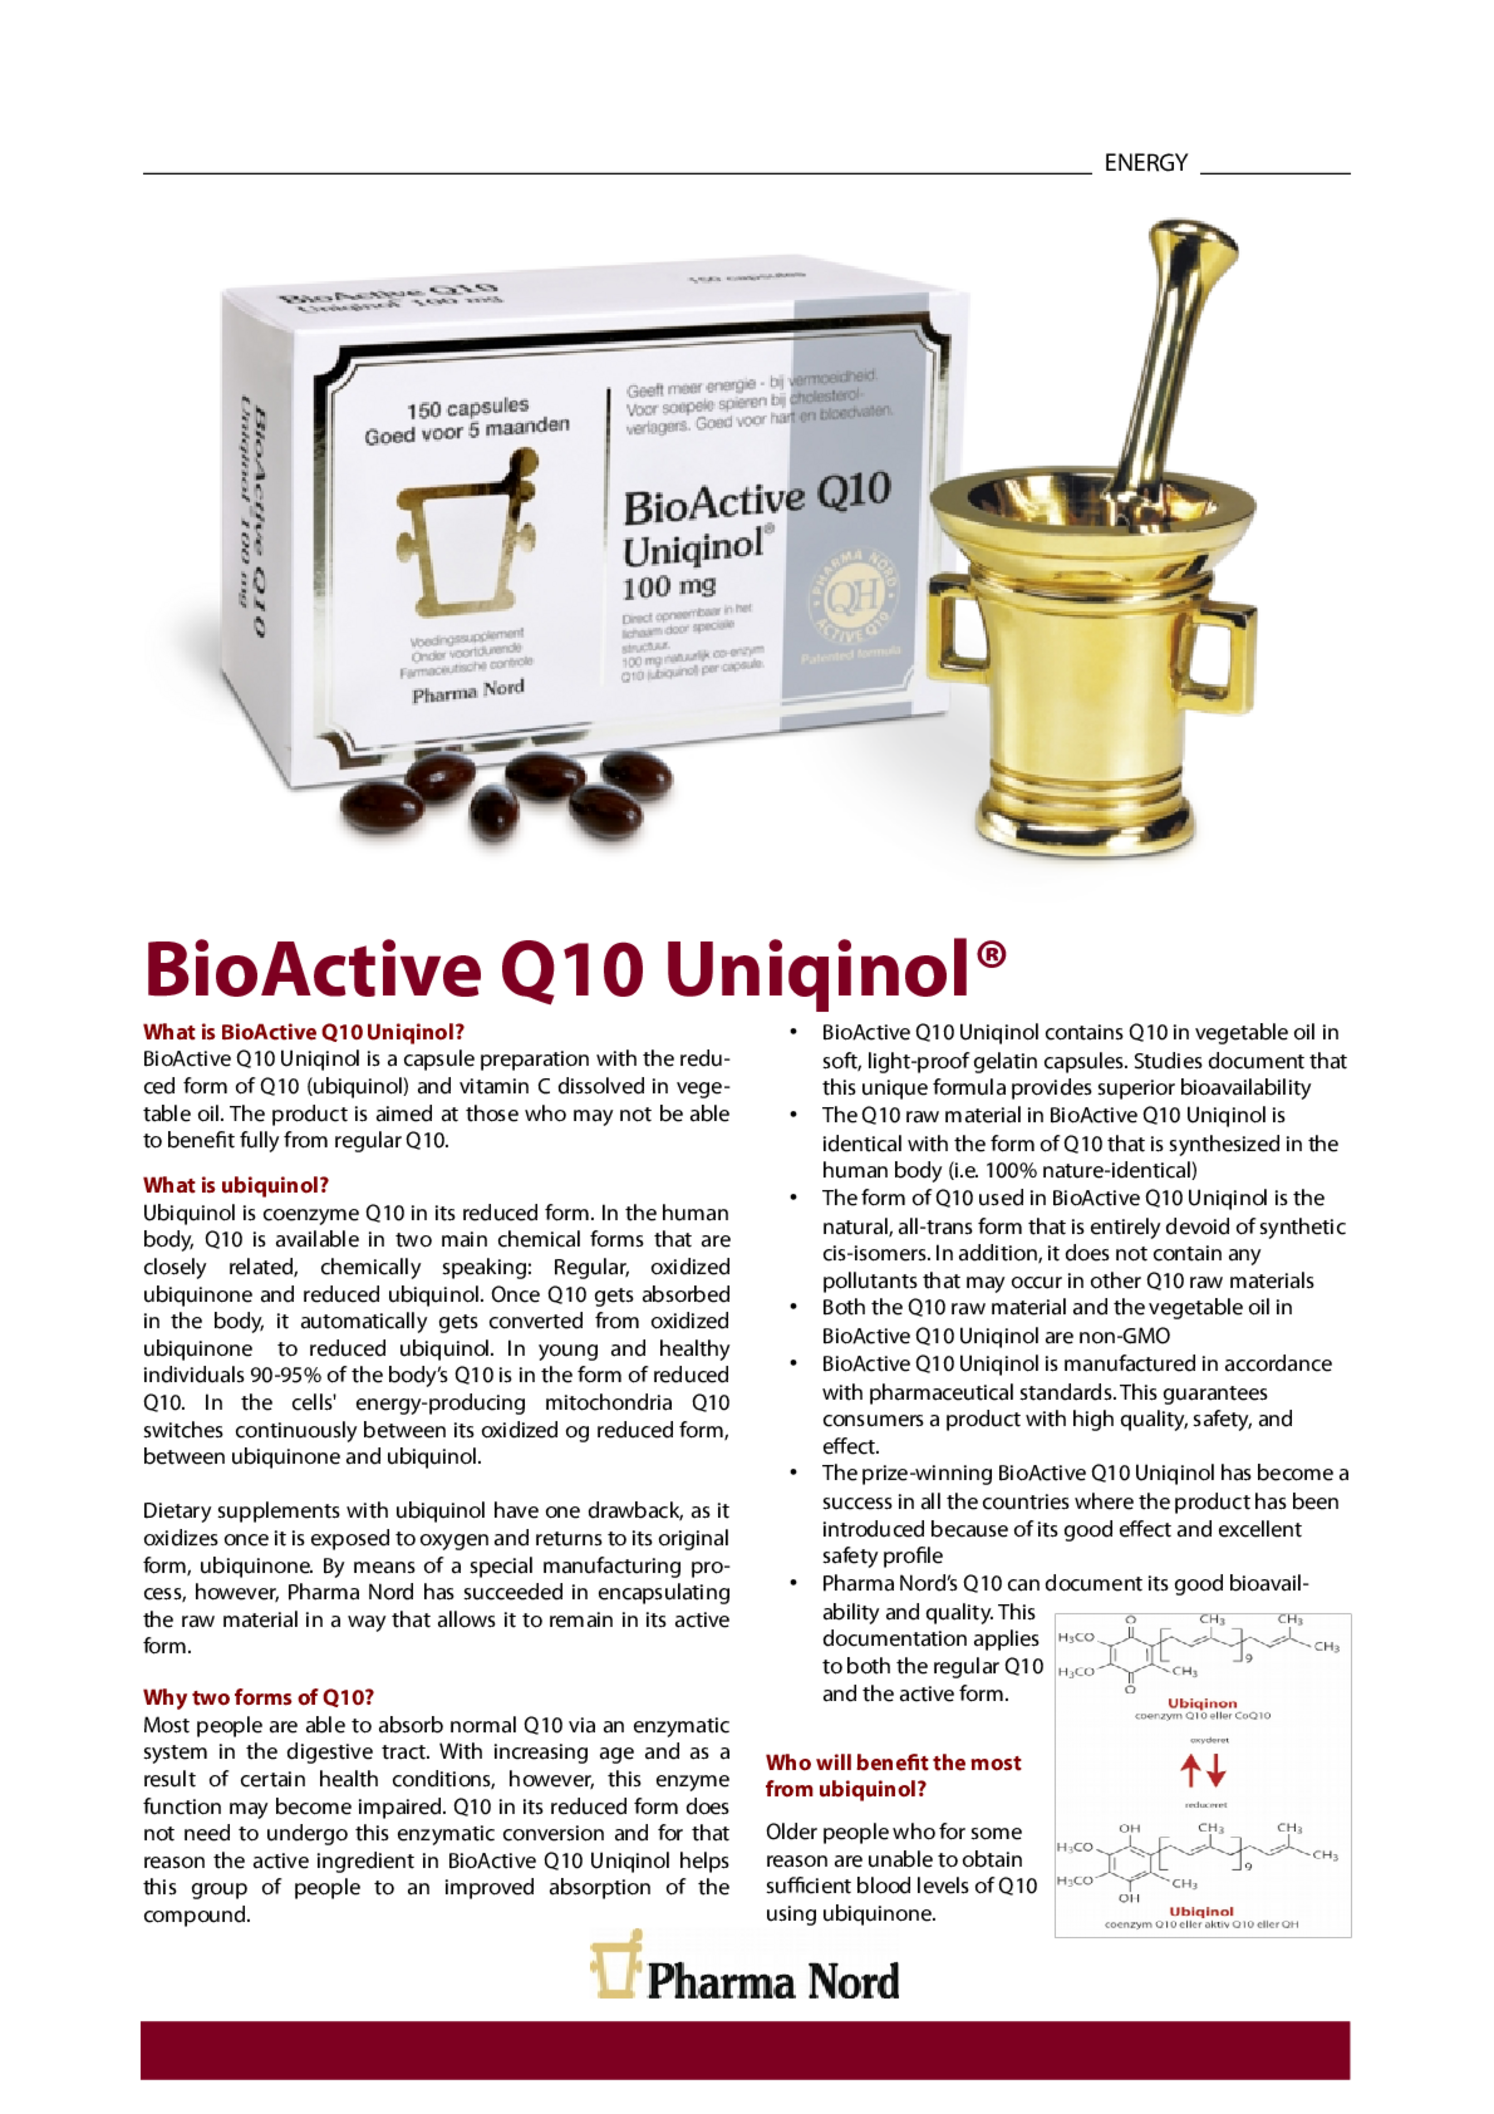 BioActive Uniqinol 100mg Capsules afbeelding van document #1, gebruiksaanwijzing